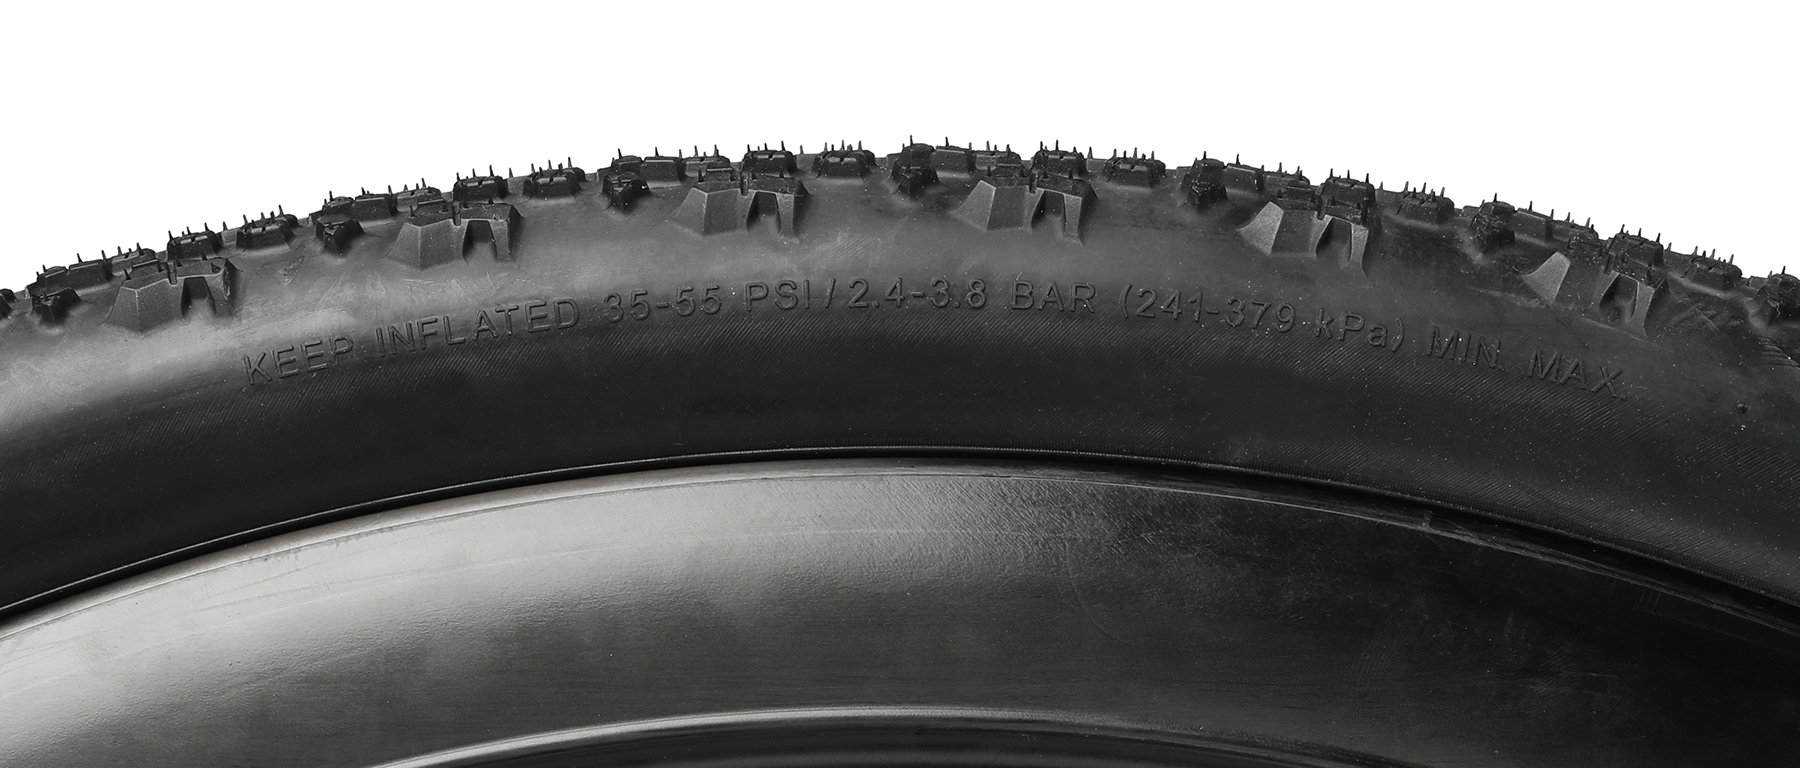 Donnelly XPlor MSO Gravel Clincher Tire